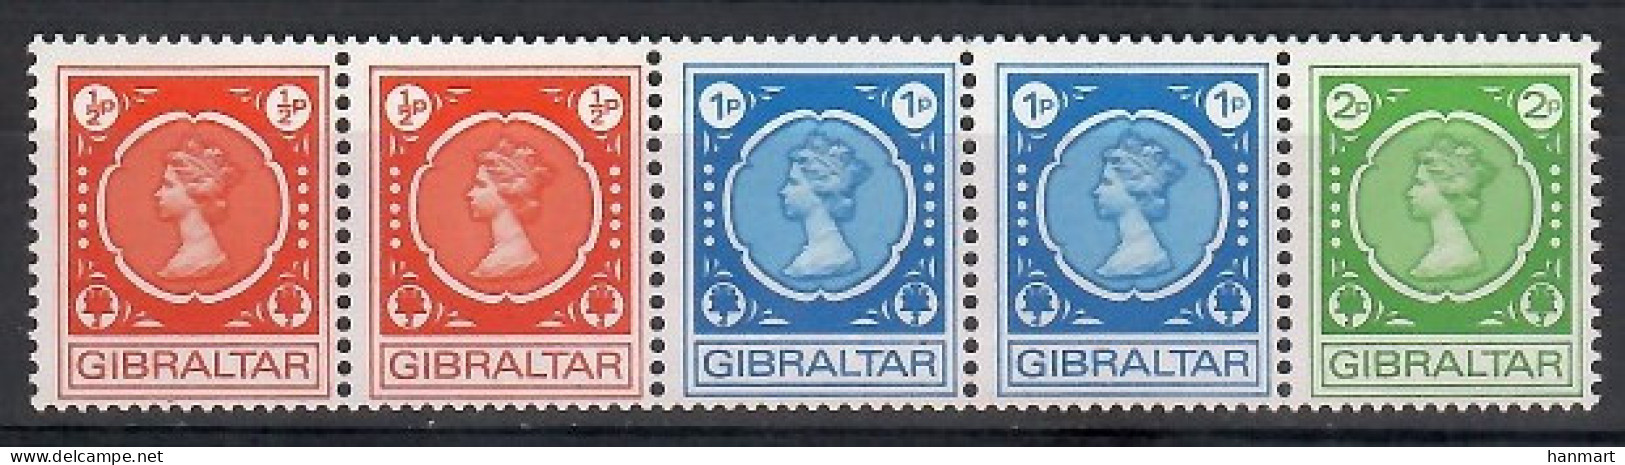 Gibraltar 1971 Mi 276-278 MNH  (ZE1 GIBfun276-278) - Familles Royales